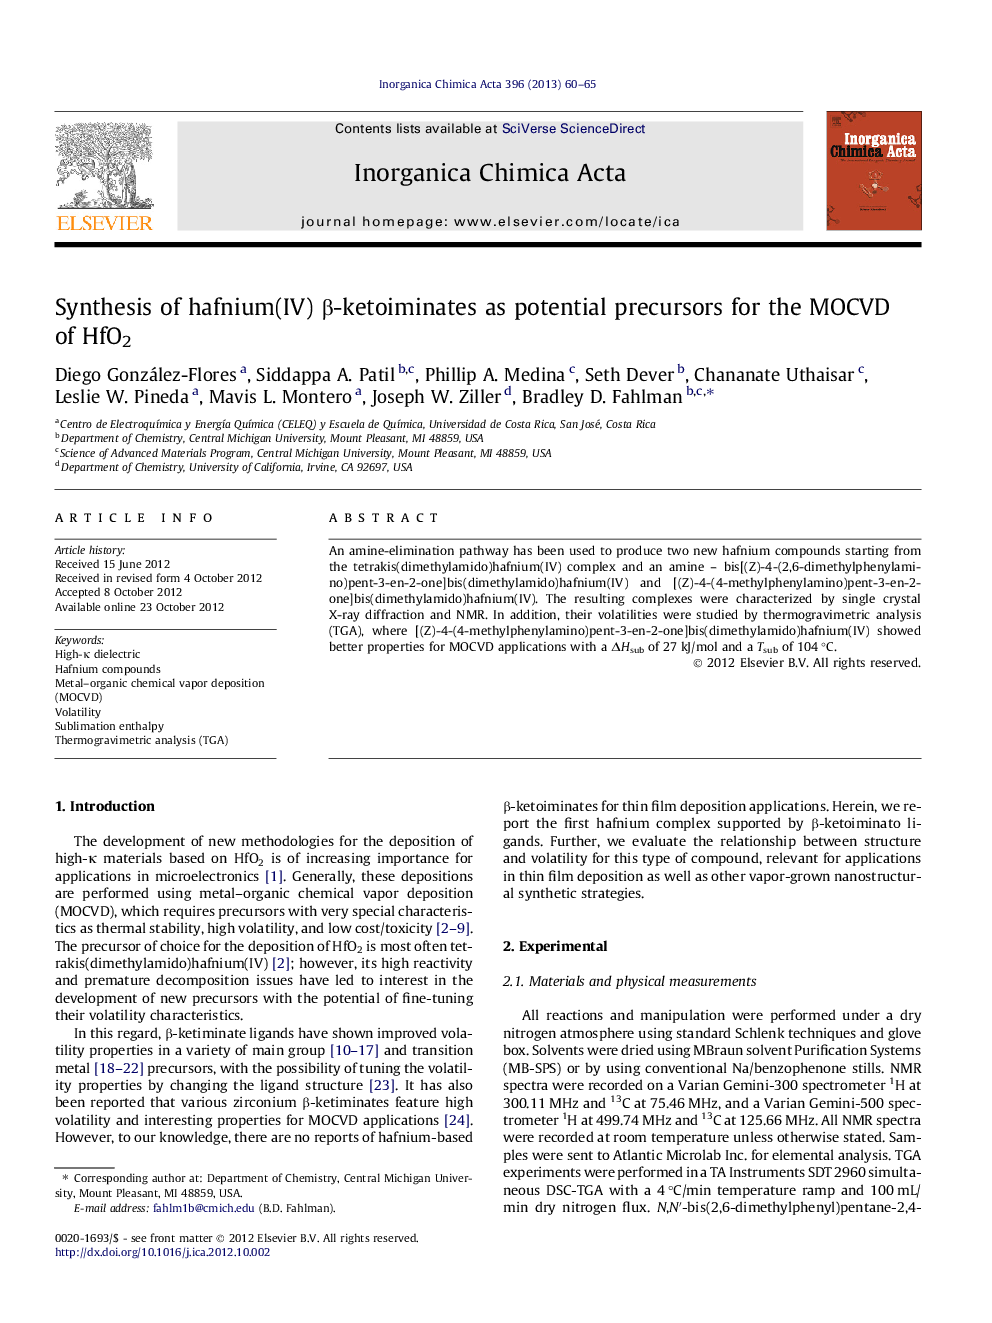 Synthesis of hafnium(IV) Î²-ketoiminates as potential precursors for the MOCVD of HfO2